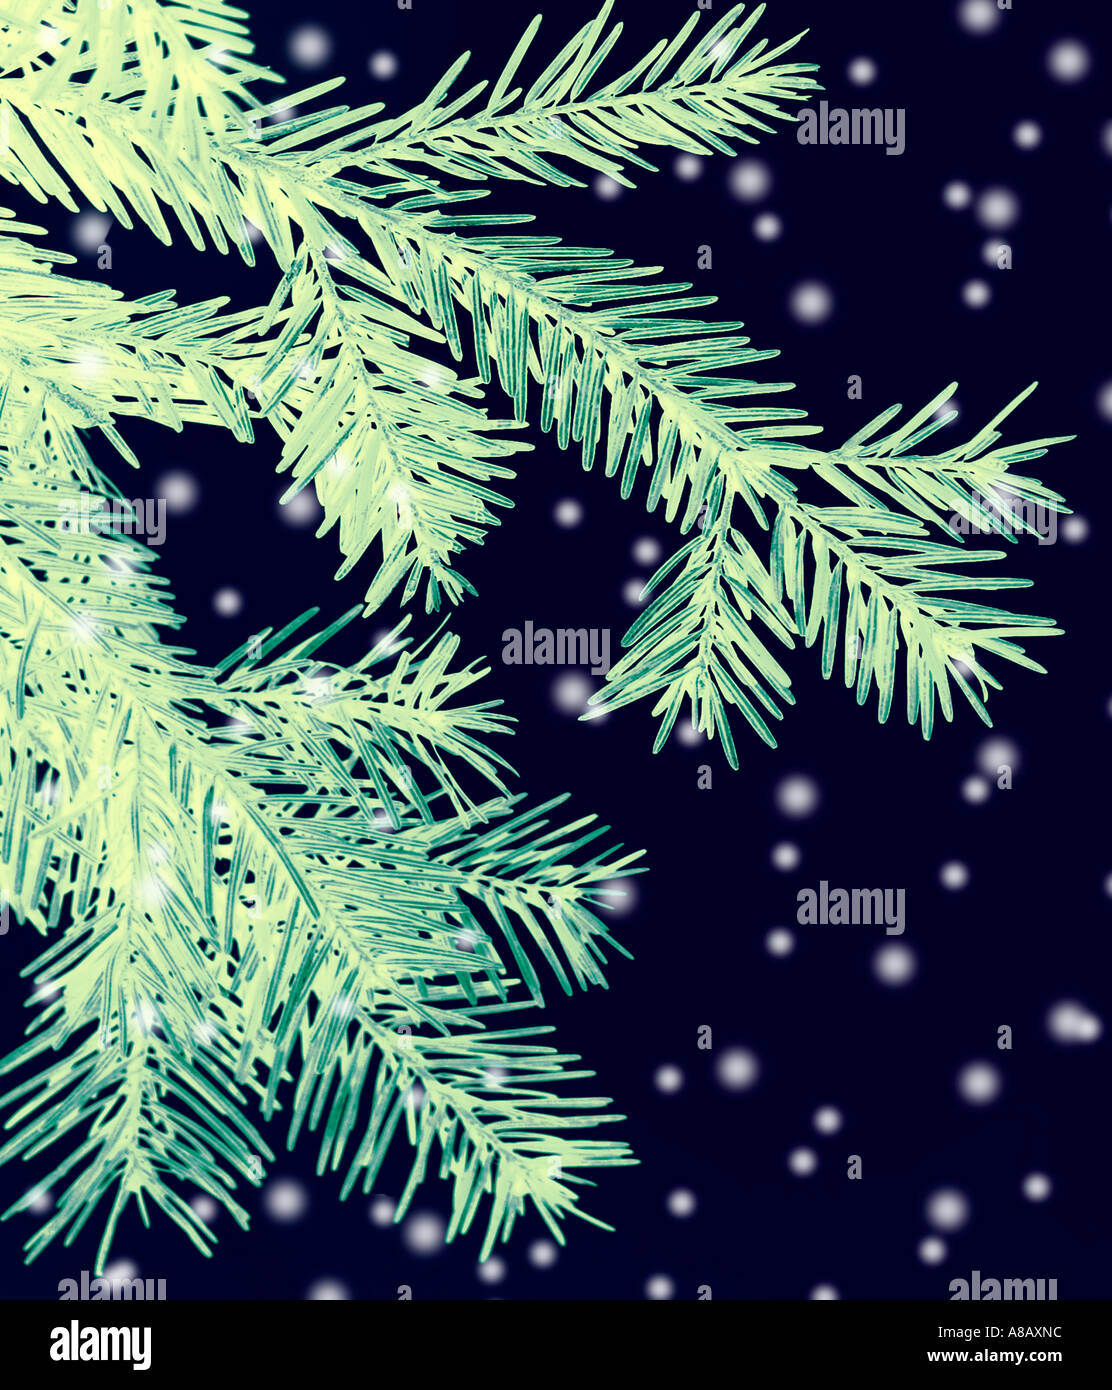 Illustrative festive image of pine tree and falling snow Stock Photo